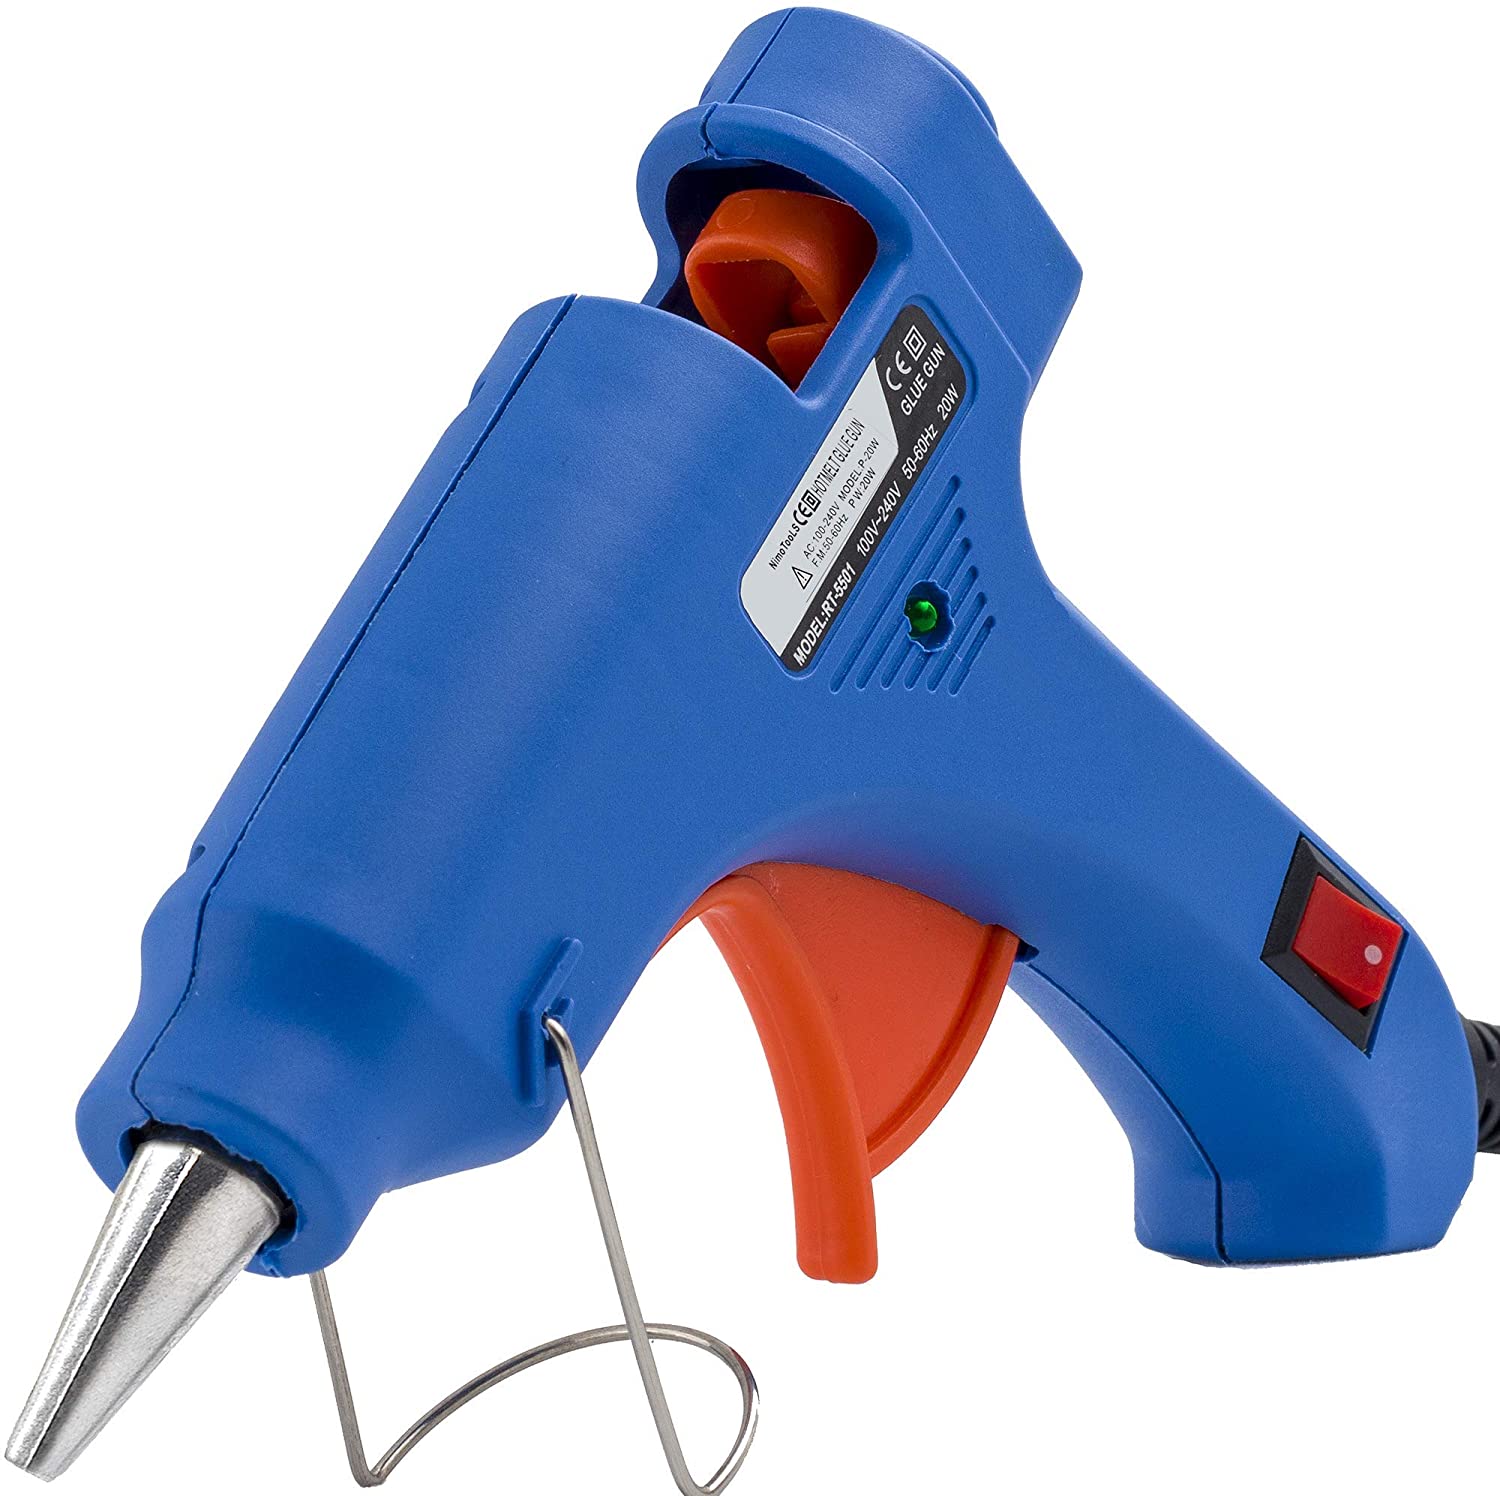 XUZHAO Mini Hot Glue Gun with for Crafts School DIY Arts Home Quick Repairs, 20W, Blue